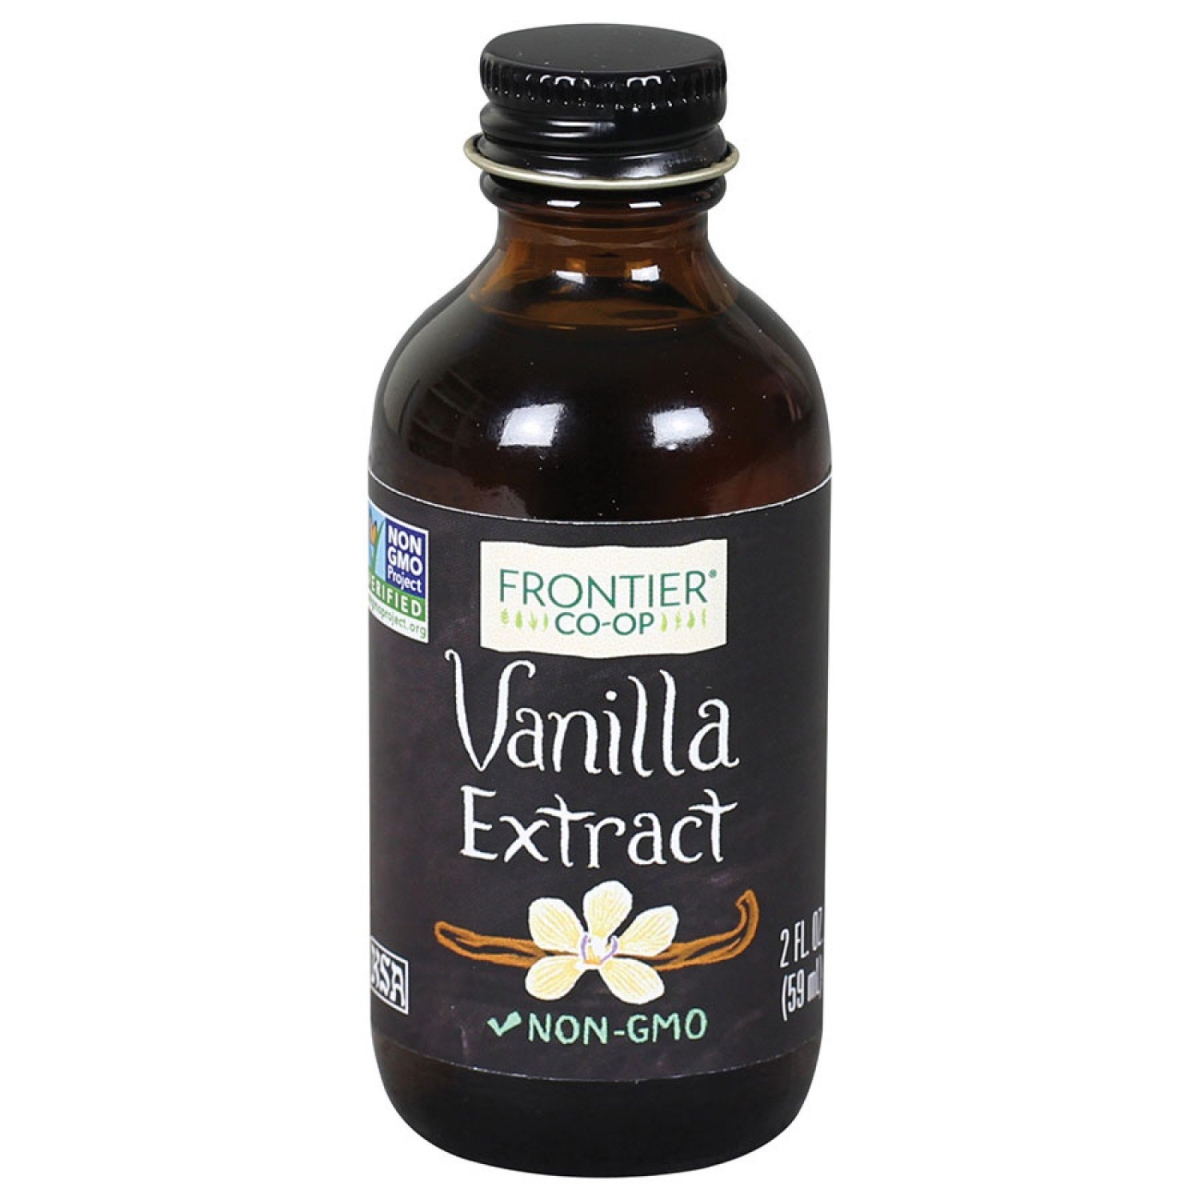 Picture of Frontier 23187 2 fl oz Vanilla Extract Bottle